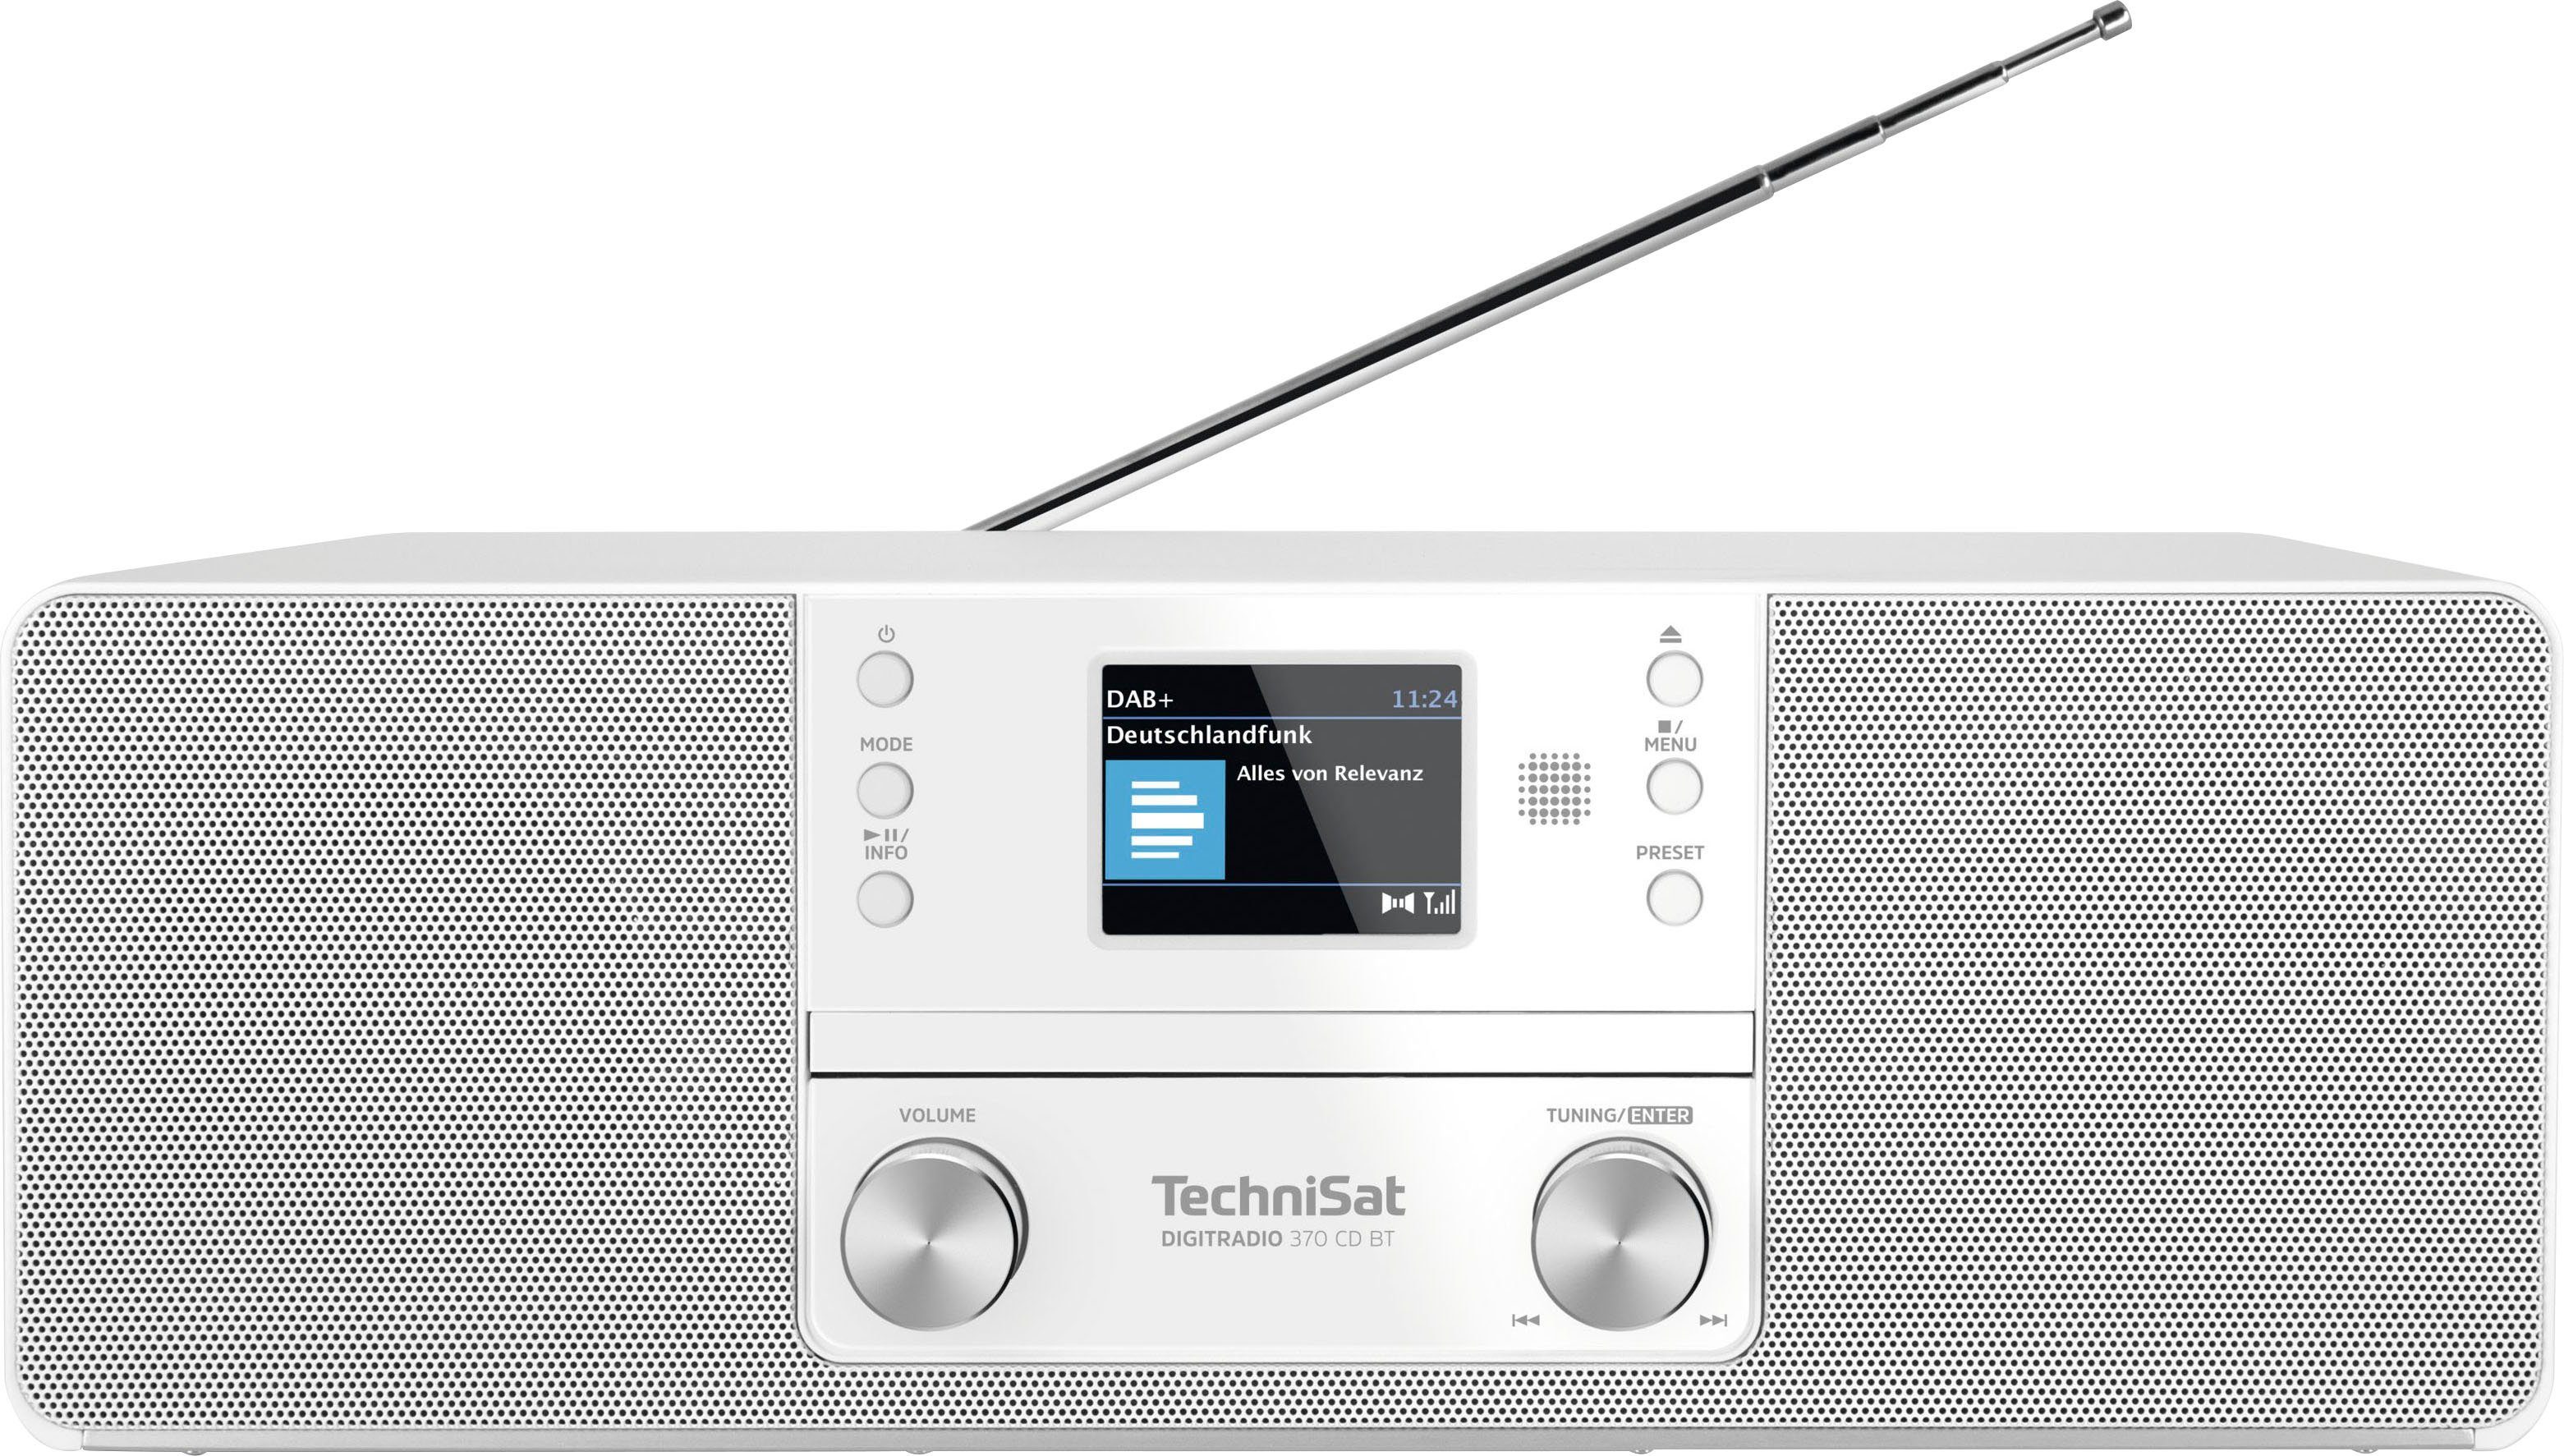 UKW W) DIGITRADIO RDS, 10 BT CD (DAB) Digitalradio (DAB), 370 TechniSat weiß (Digitalradio mit